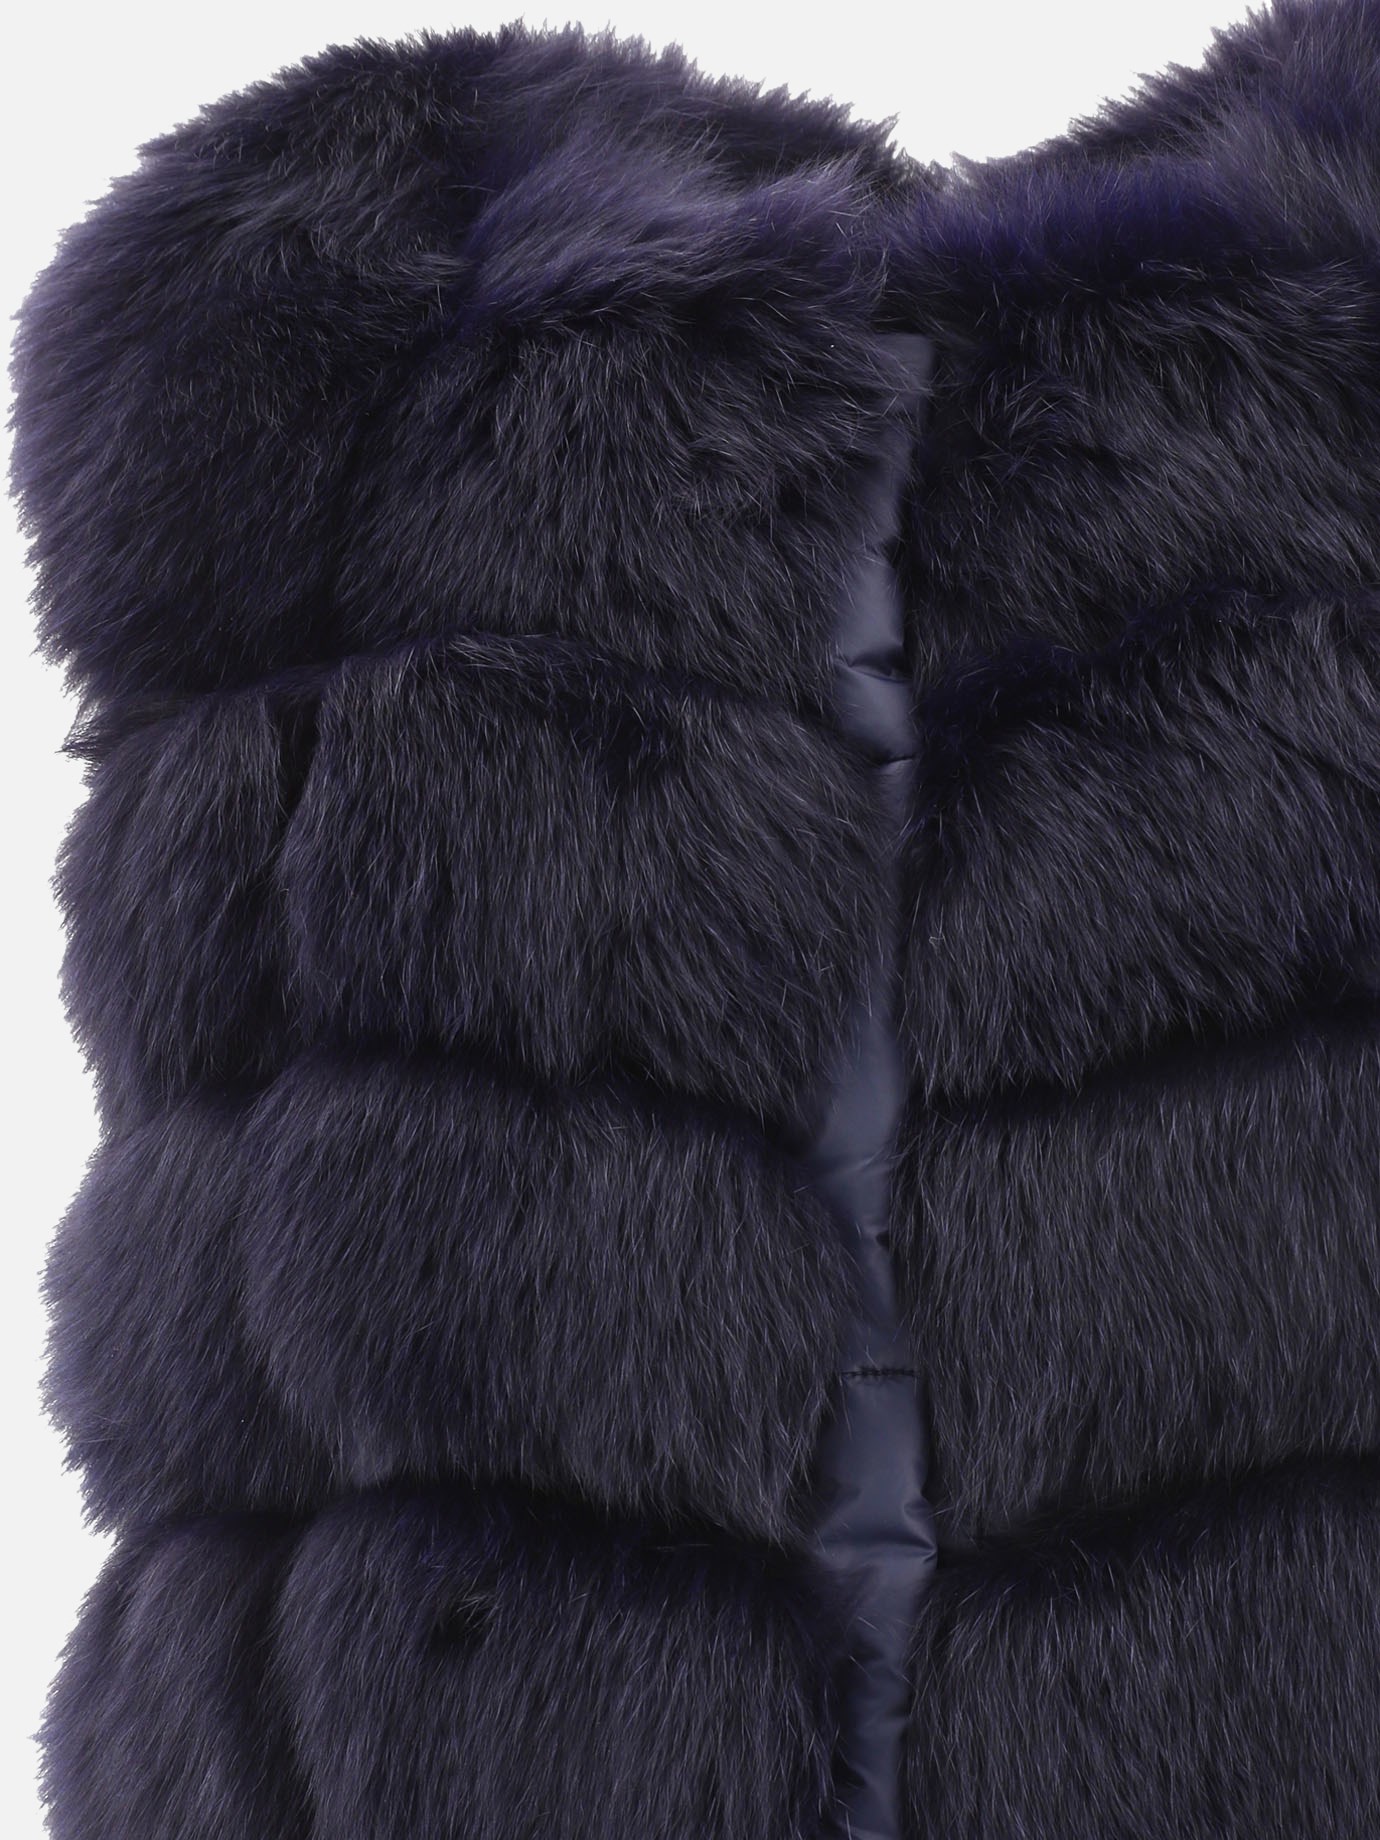  Quadrotti  fur jacket by Frame Fur